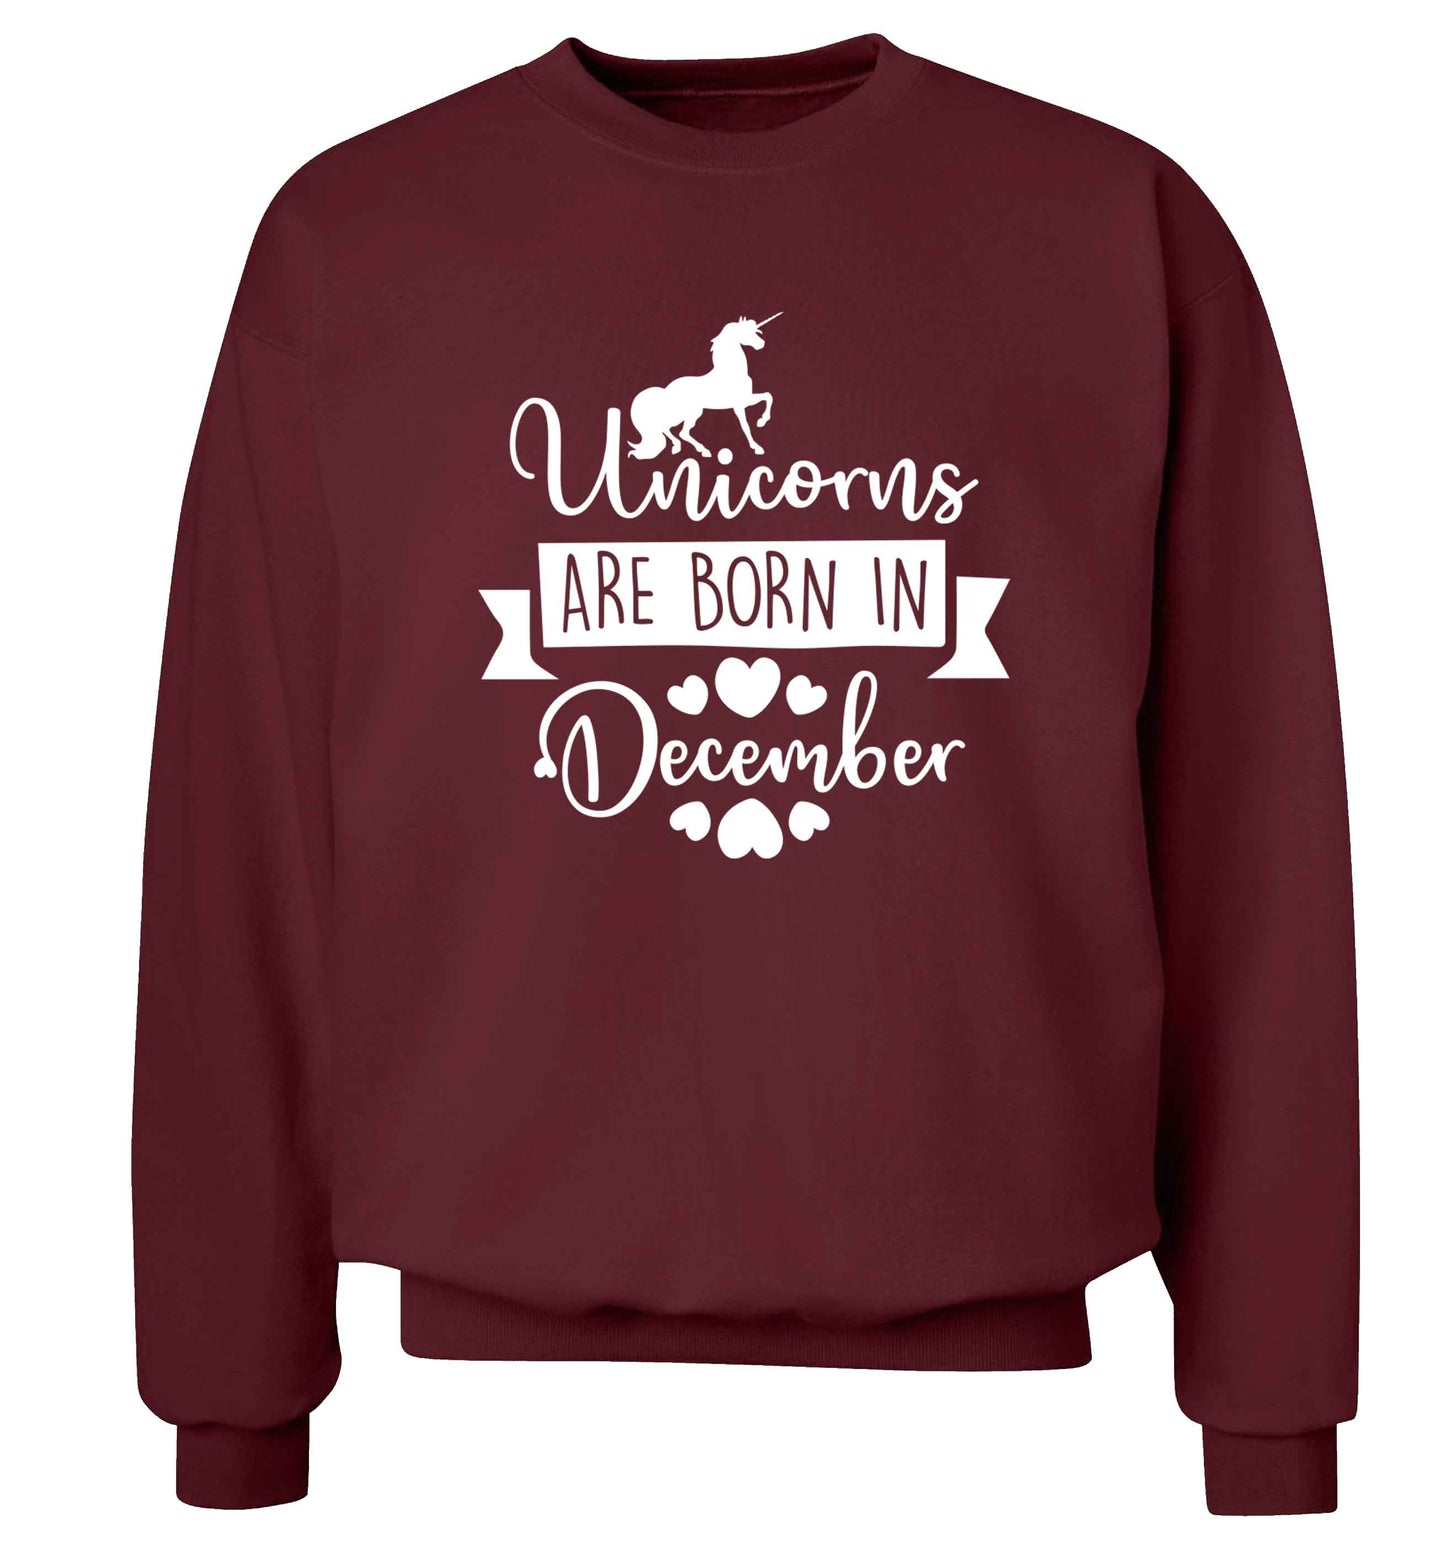 Unicorns are born in December Adult's unisex maroon Sweater 2XL